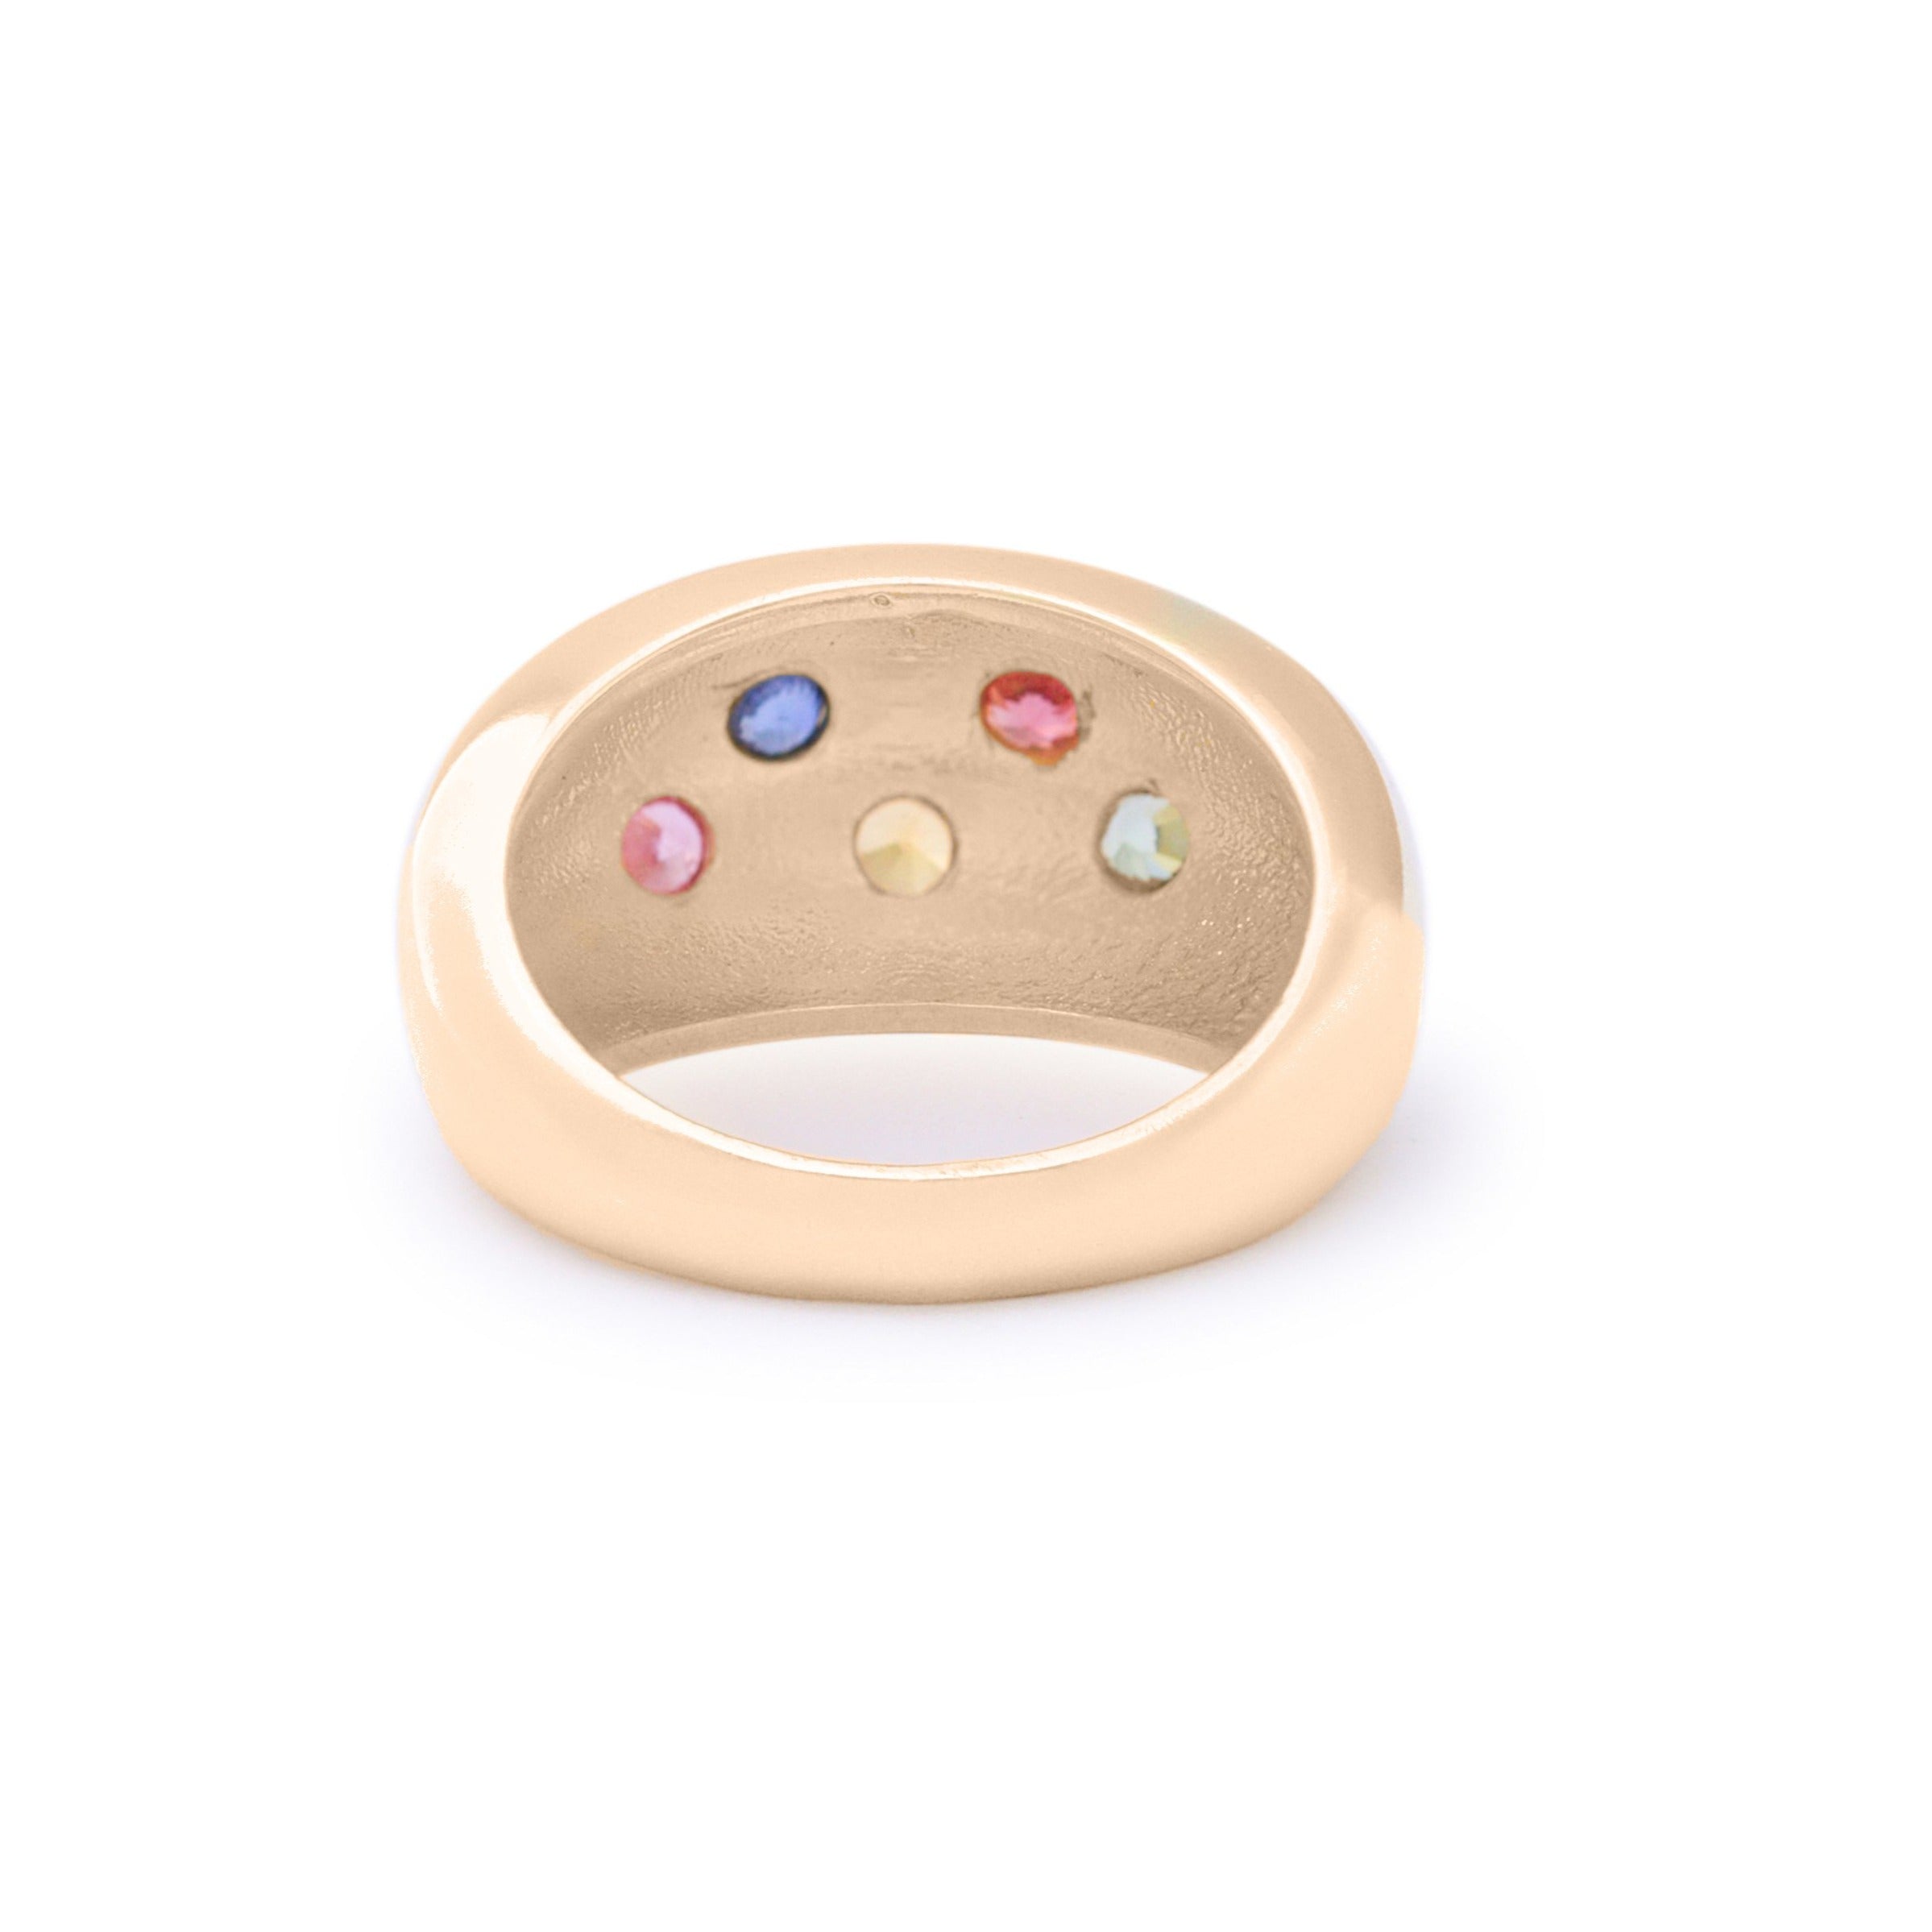 The F&B Multi-Colored Sapphire Starburst Dome Ring